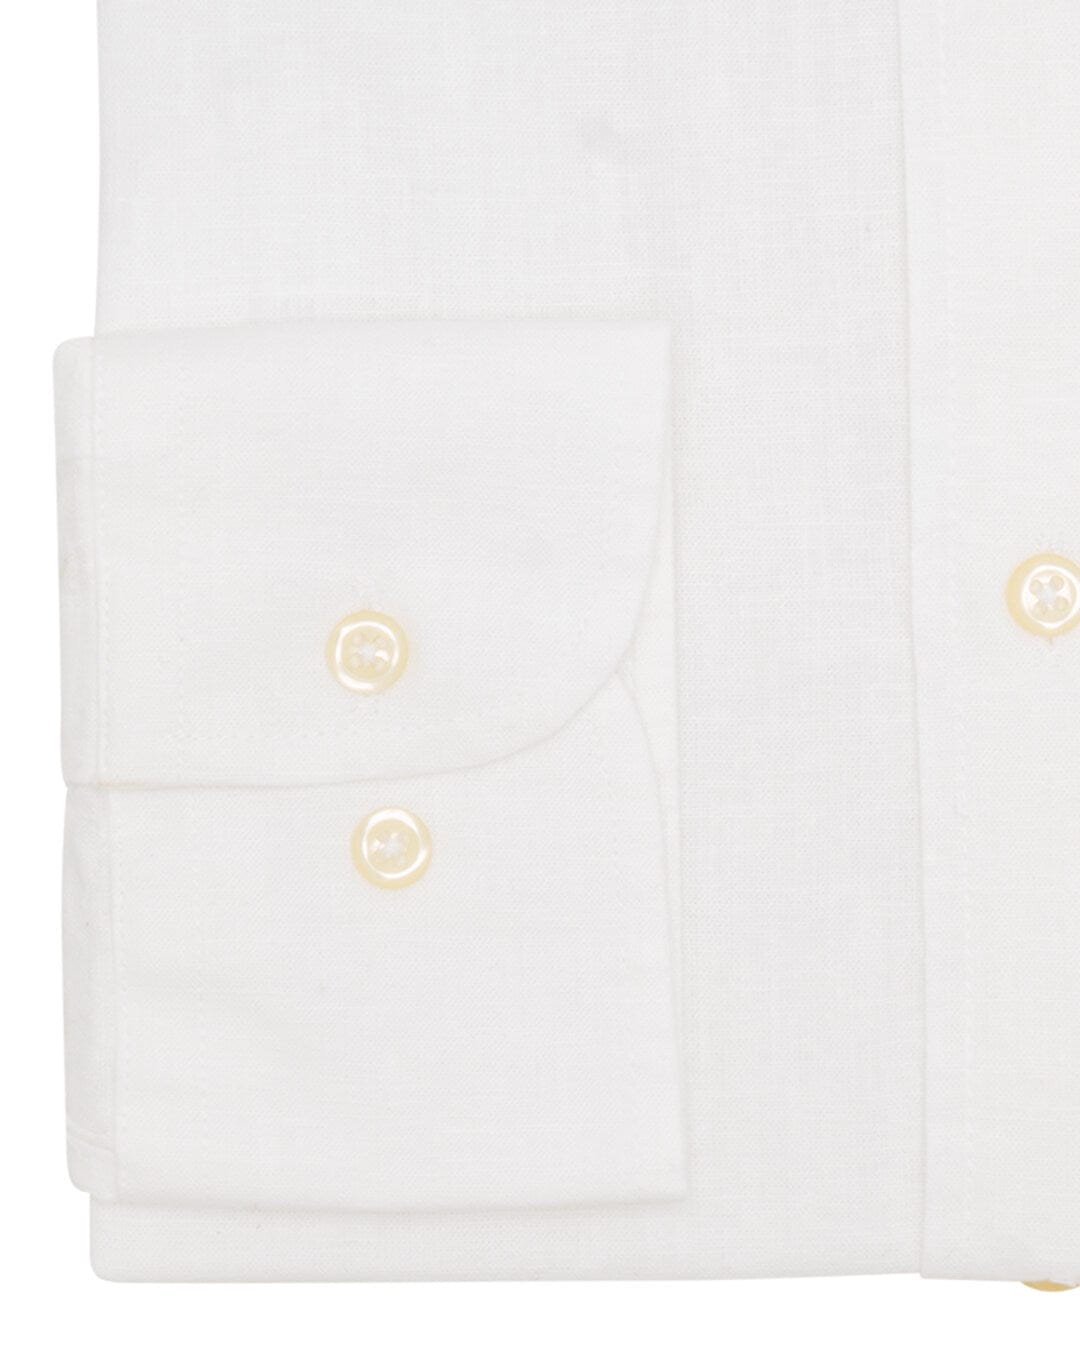 Gagliardi Shirts Gagliardi White Plain Tailored Fit Long Sleeve Cutaway Collar Linen Shirt